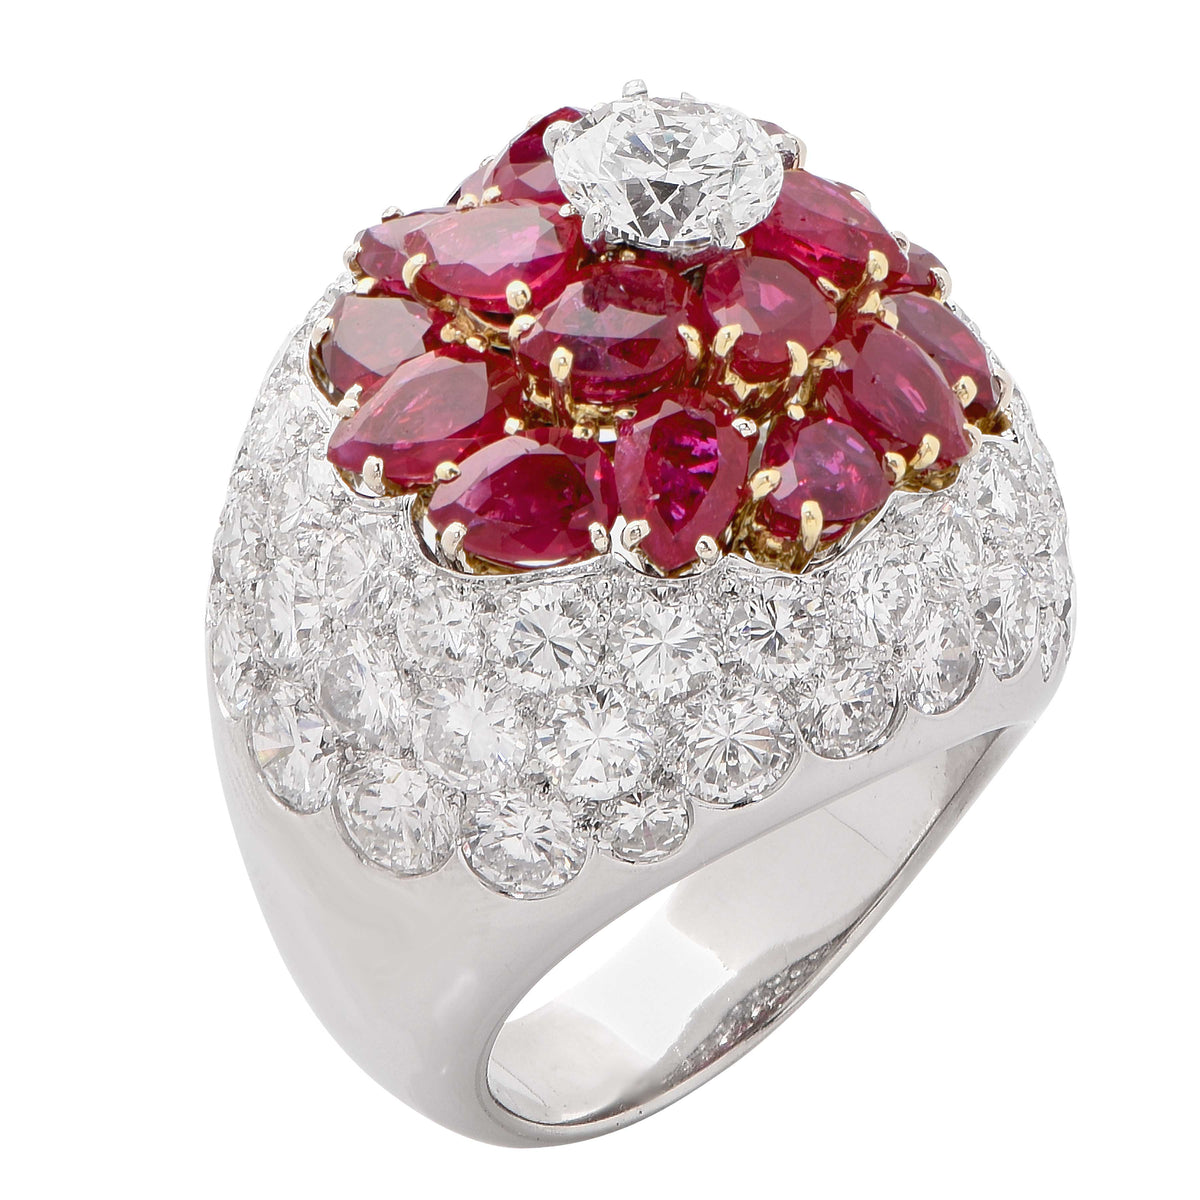 French Bombe Flowerhead 5 Carat Burmese Ruby and 7 Carat Diamond Platinum Ring